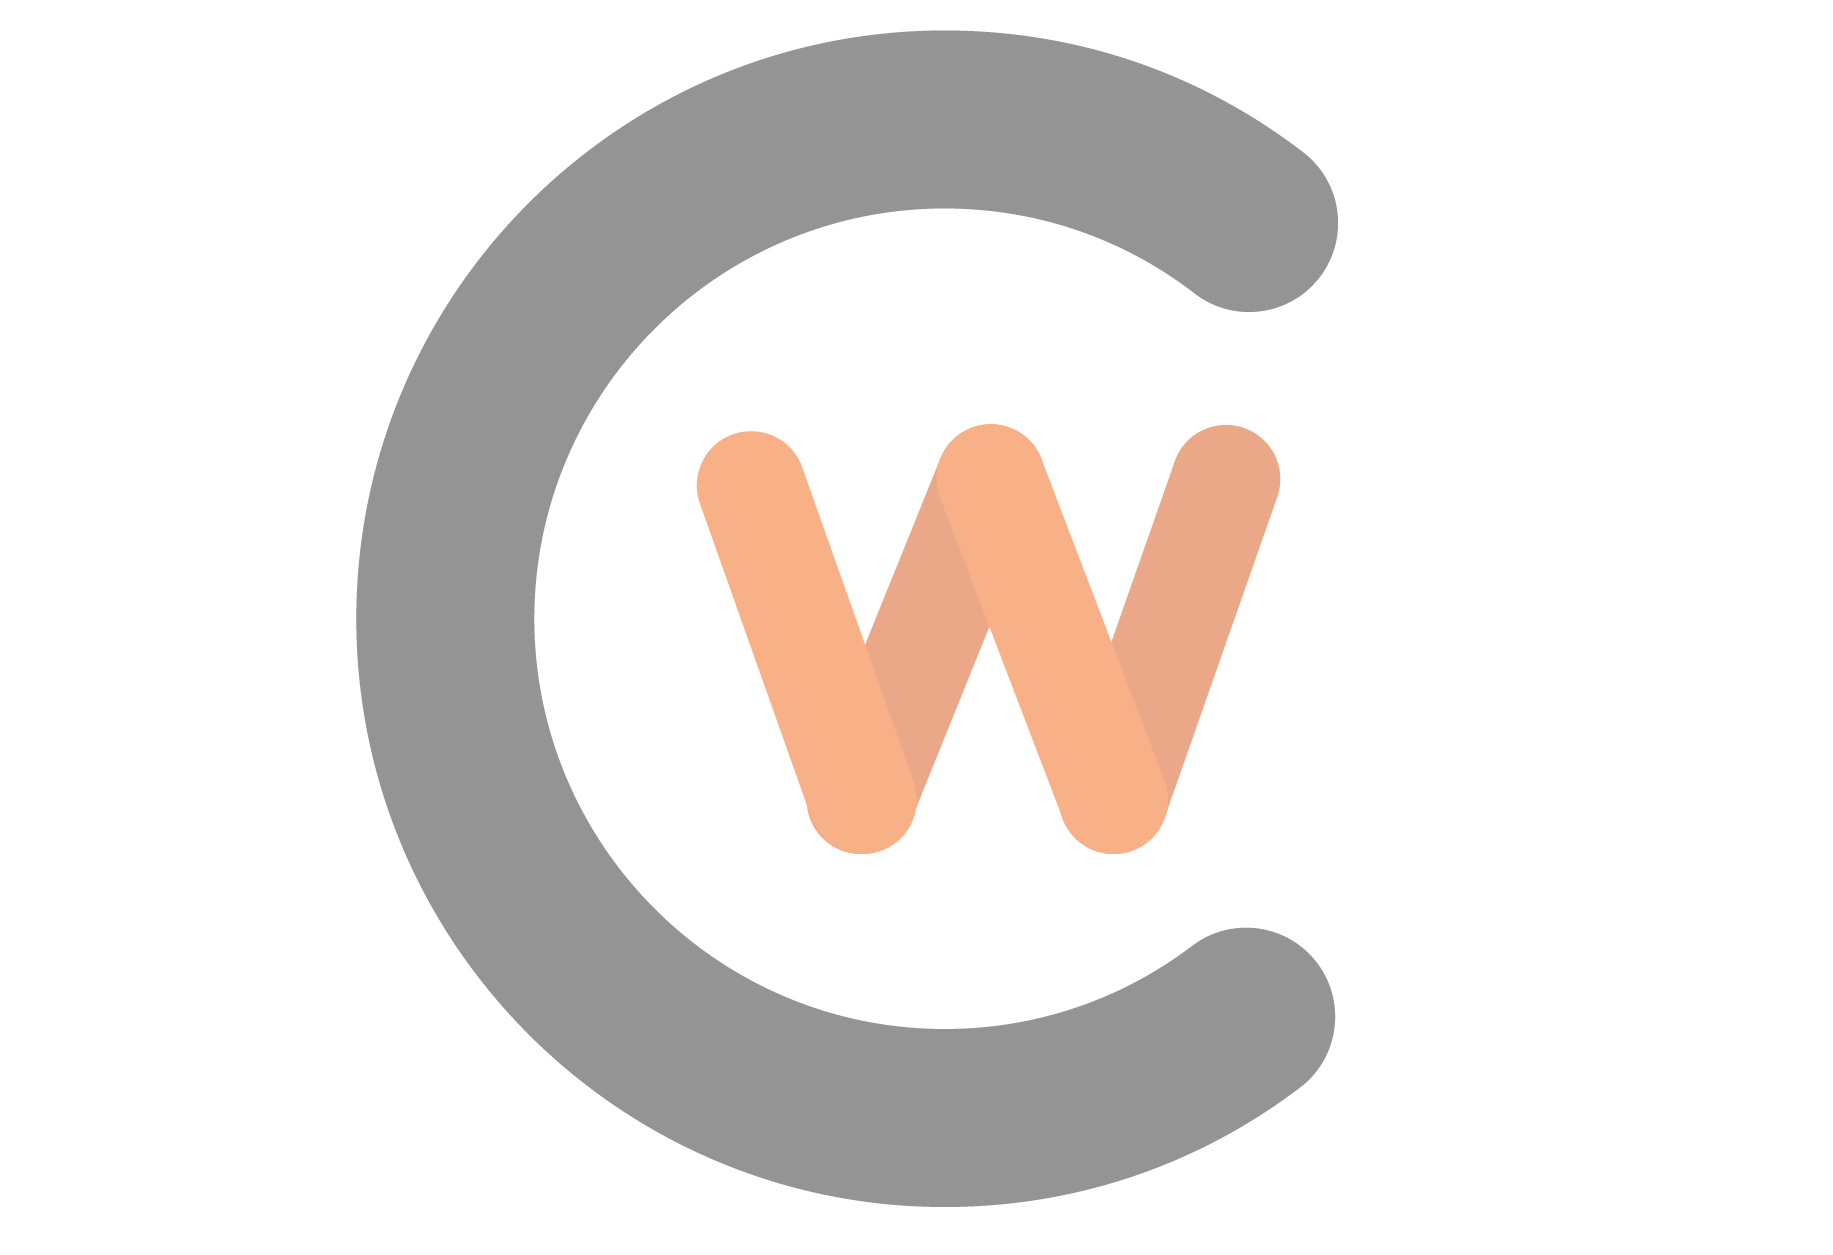 CWC horizontal faded logo